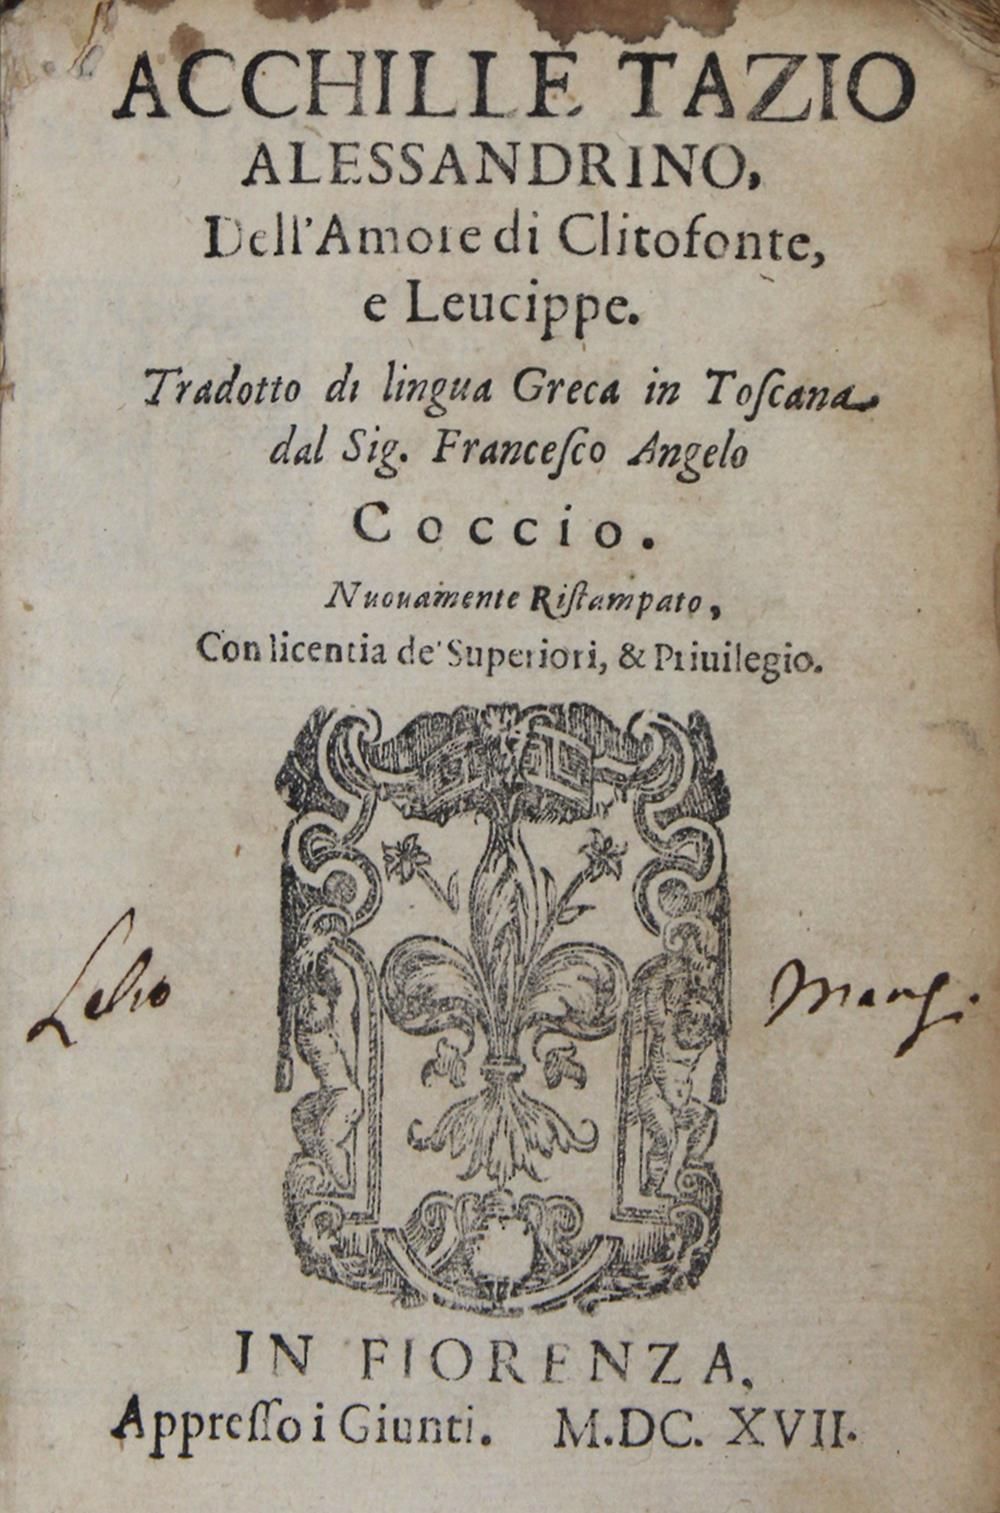 Tatius,A. Dell'Amore di Clitofonte, e Leucippe.以希腊语翻译成托斯卡纳语，并由作者签名。弗朗西斯科-安吉洛-科乔。&hellip;